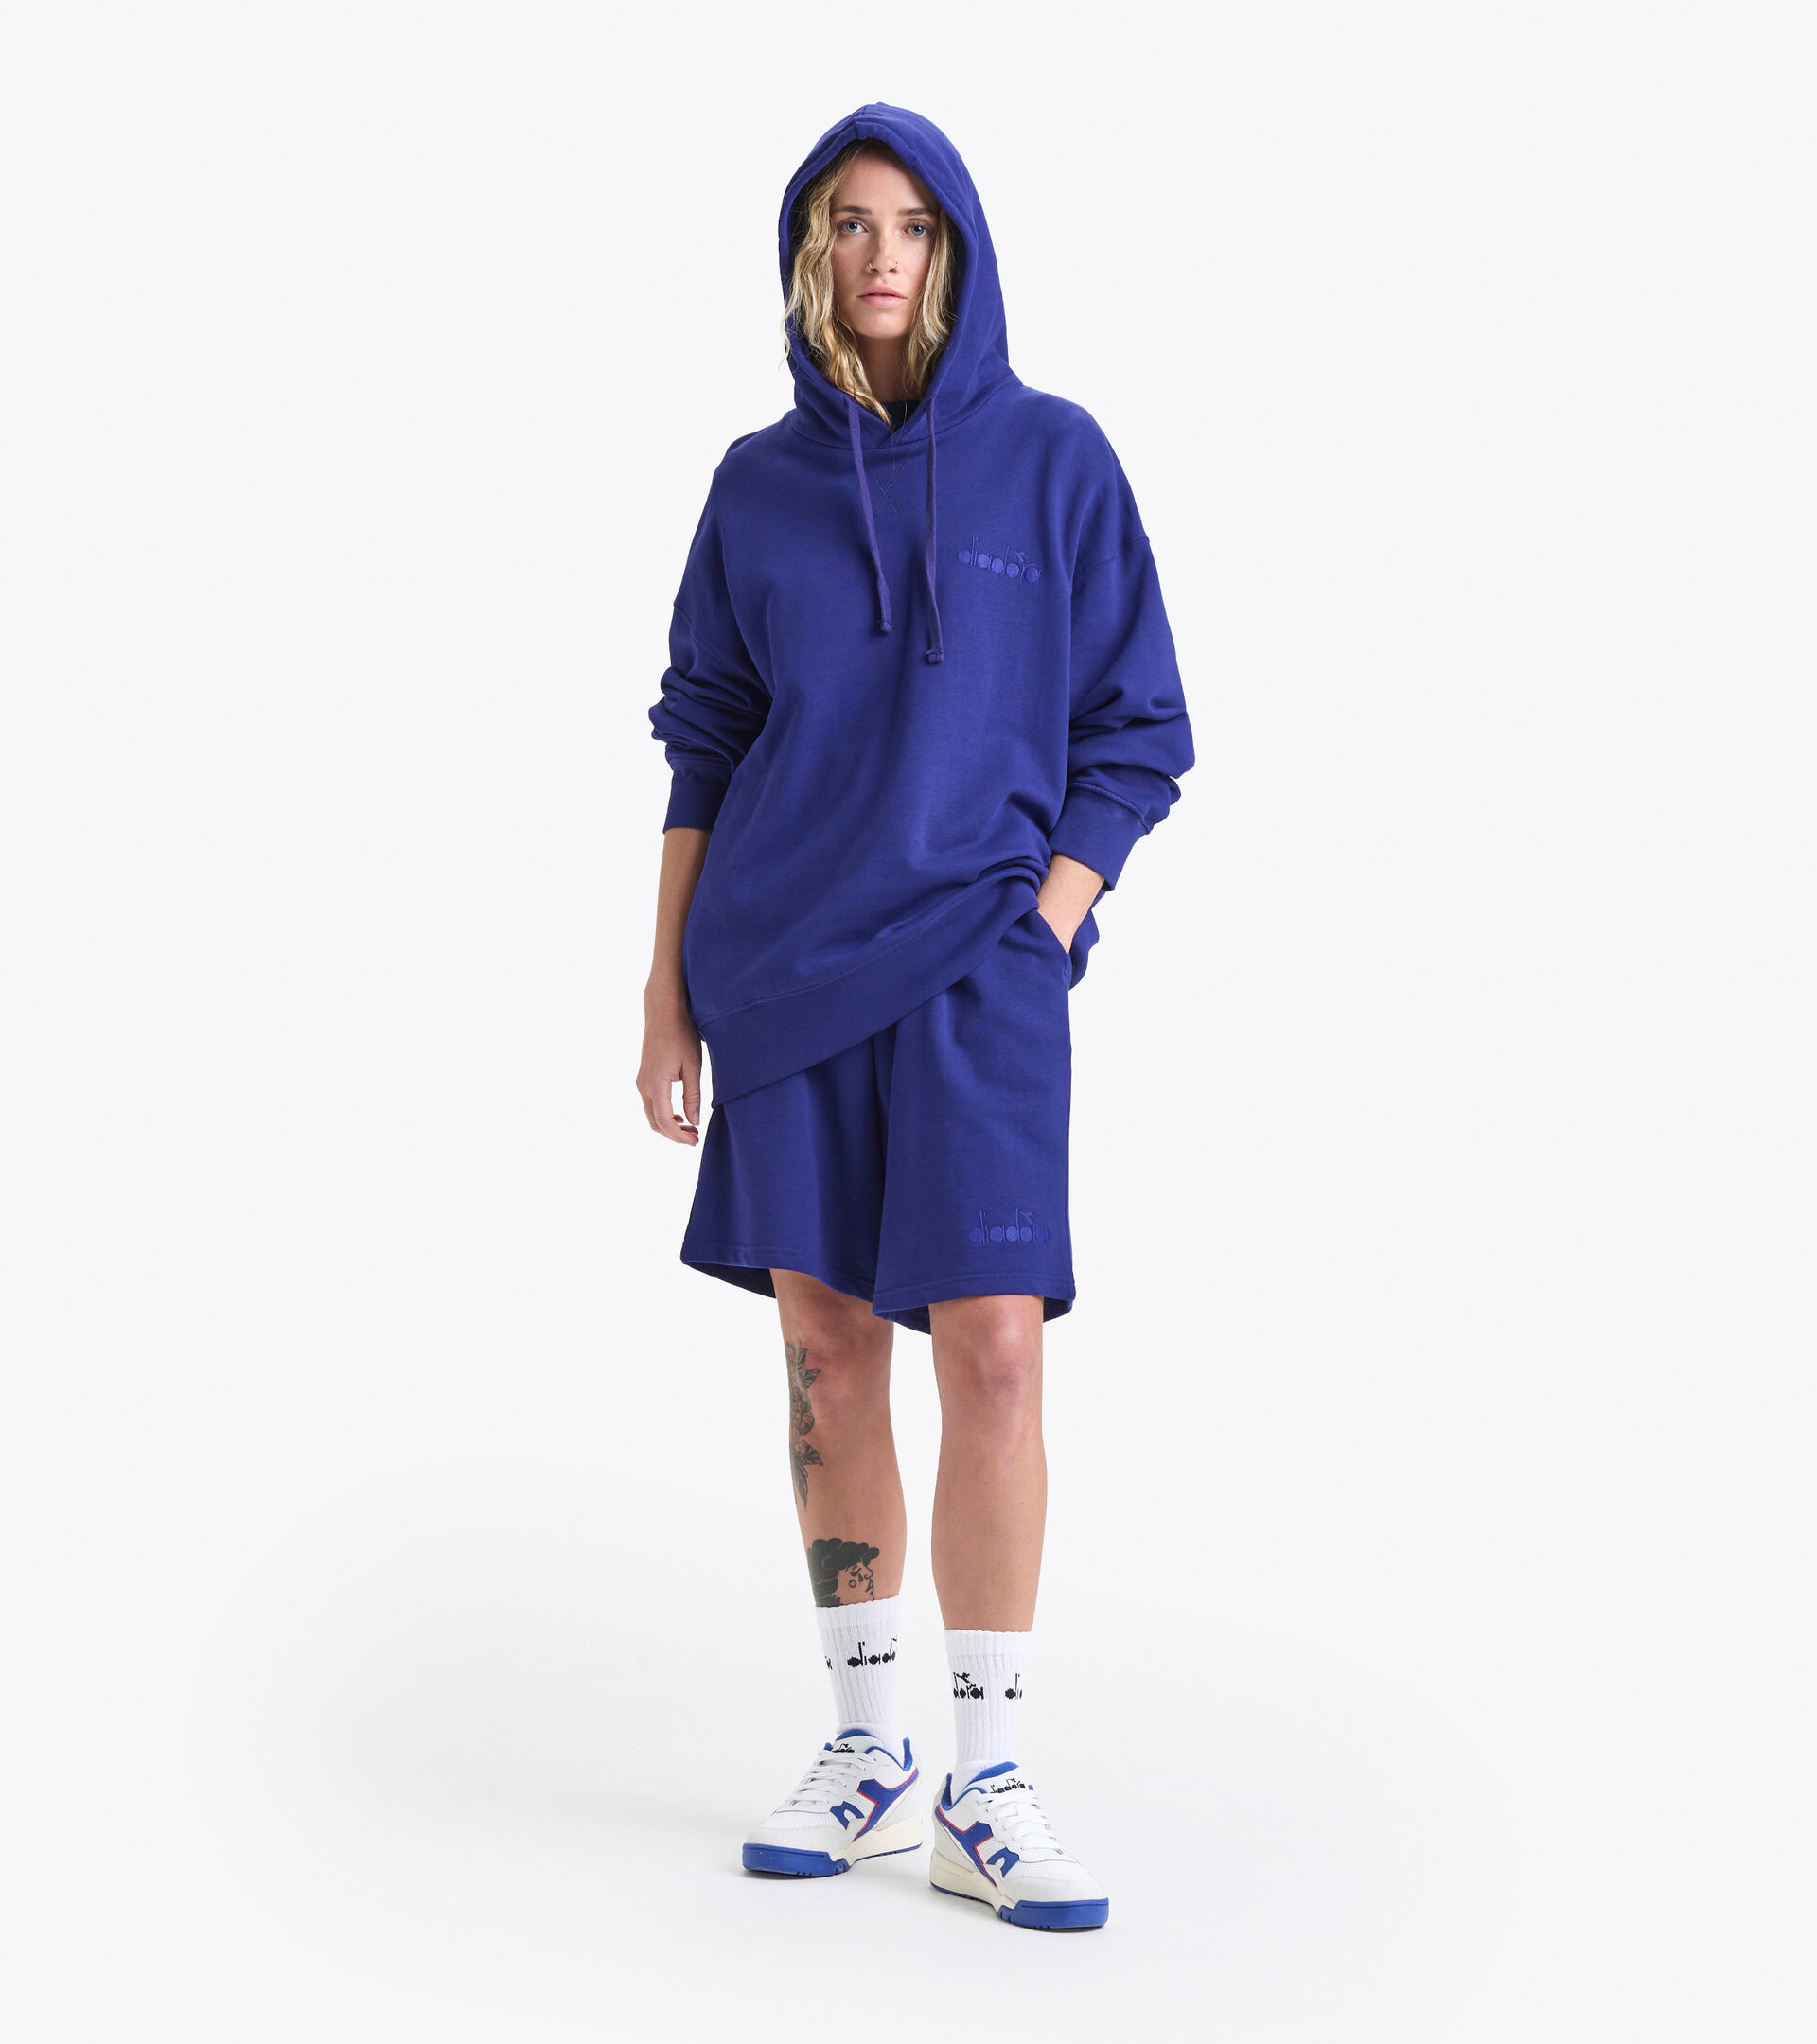 Cotton hoodie - Gender neutral HOODIE SPW LOGO BLUE PRINT - Diadora